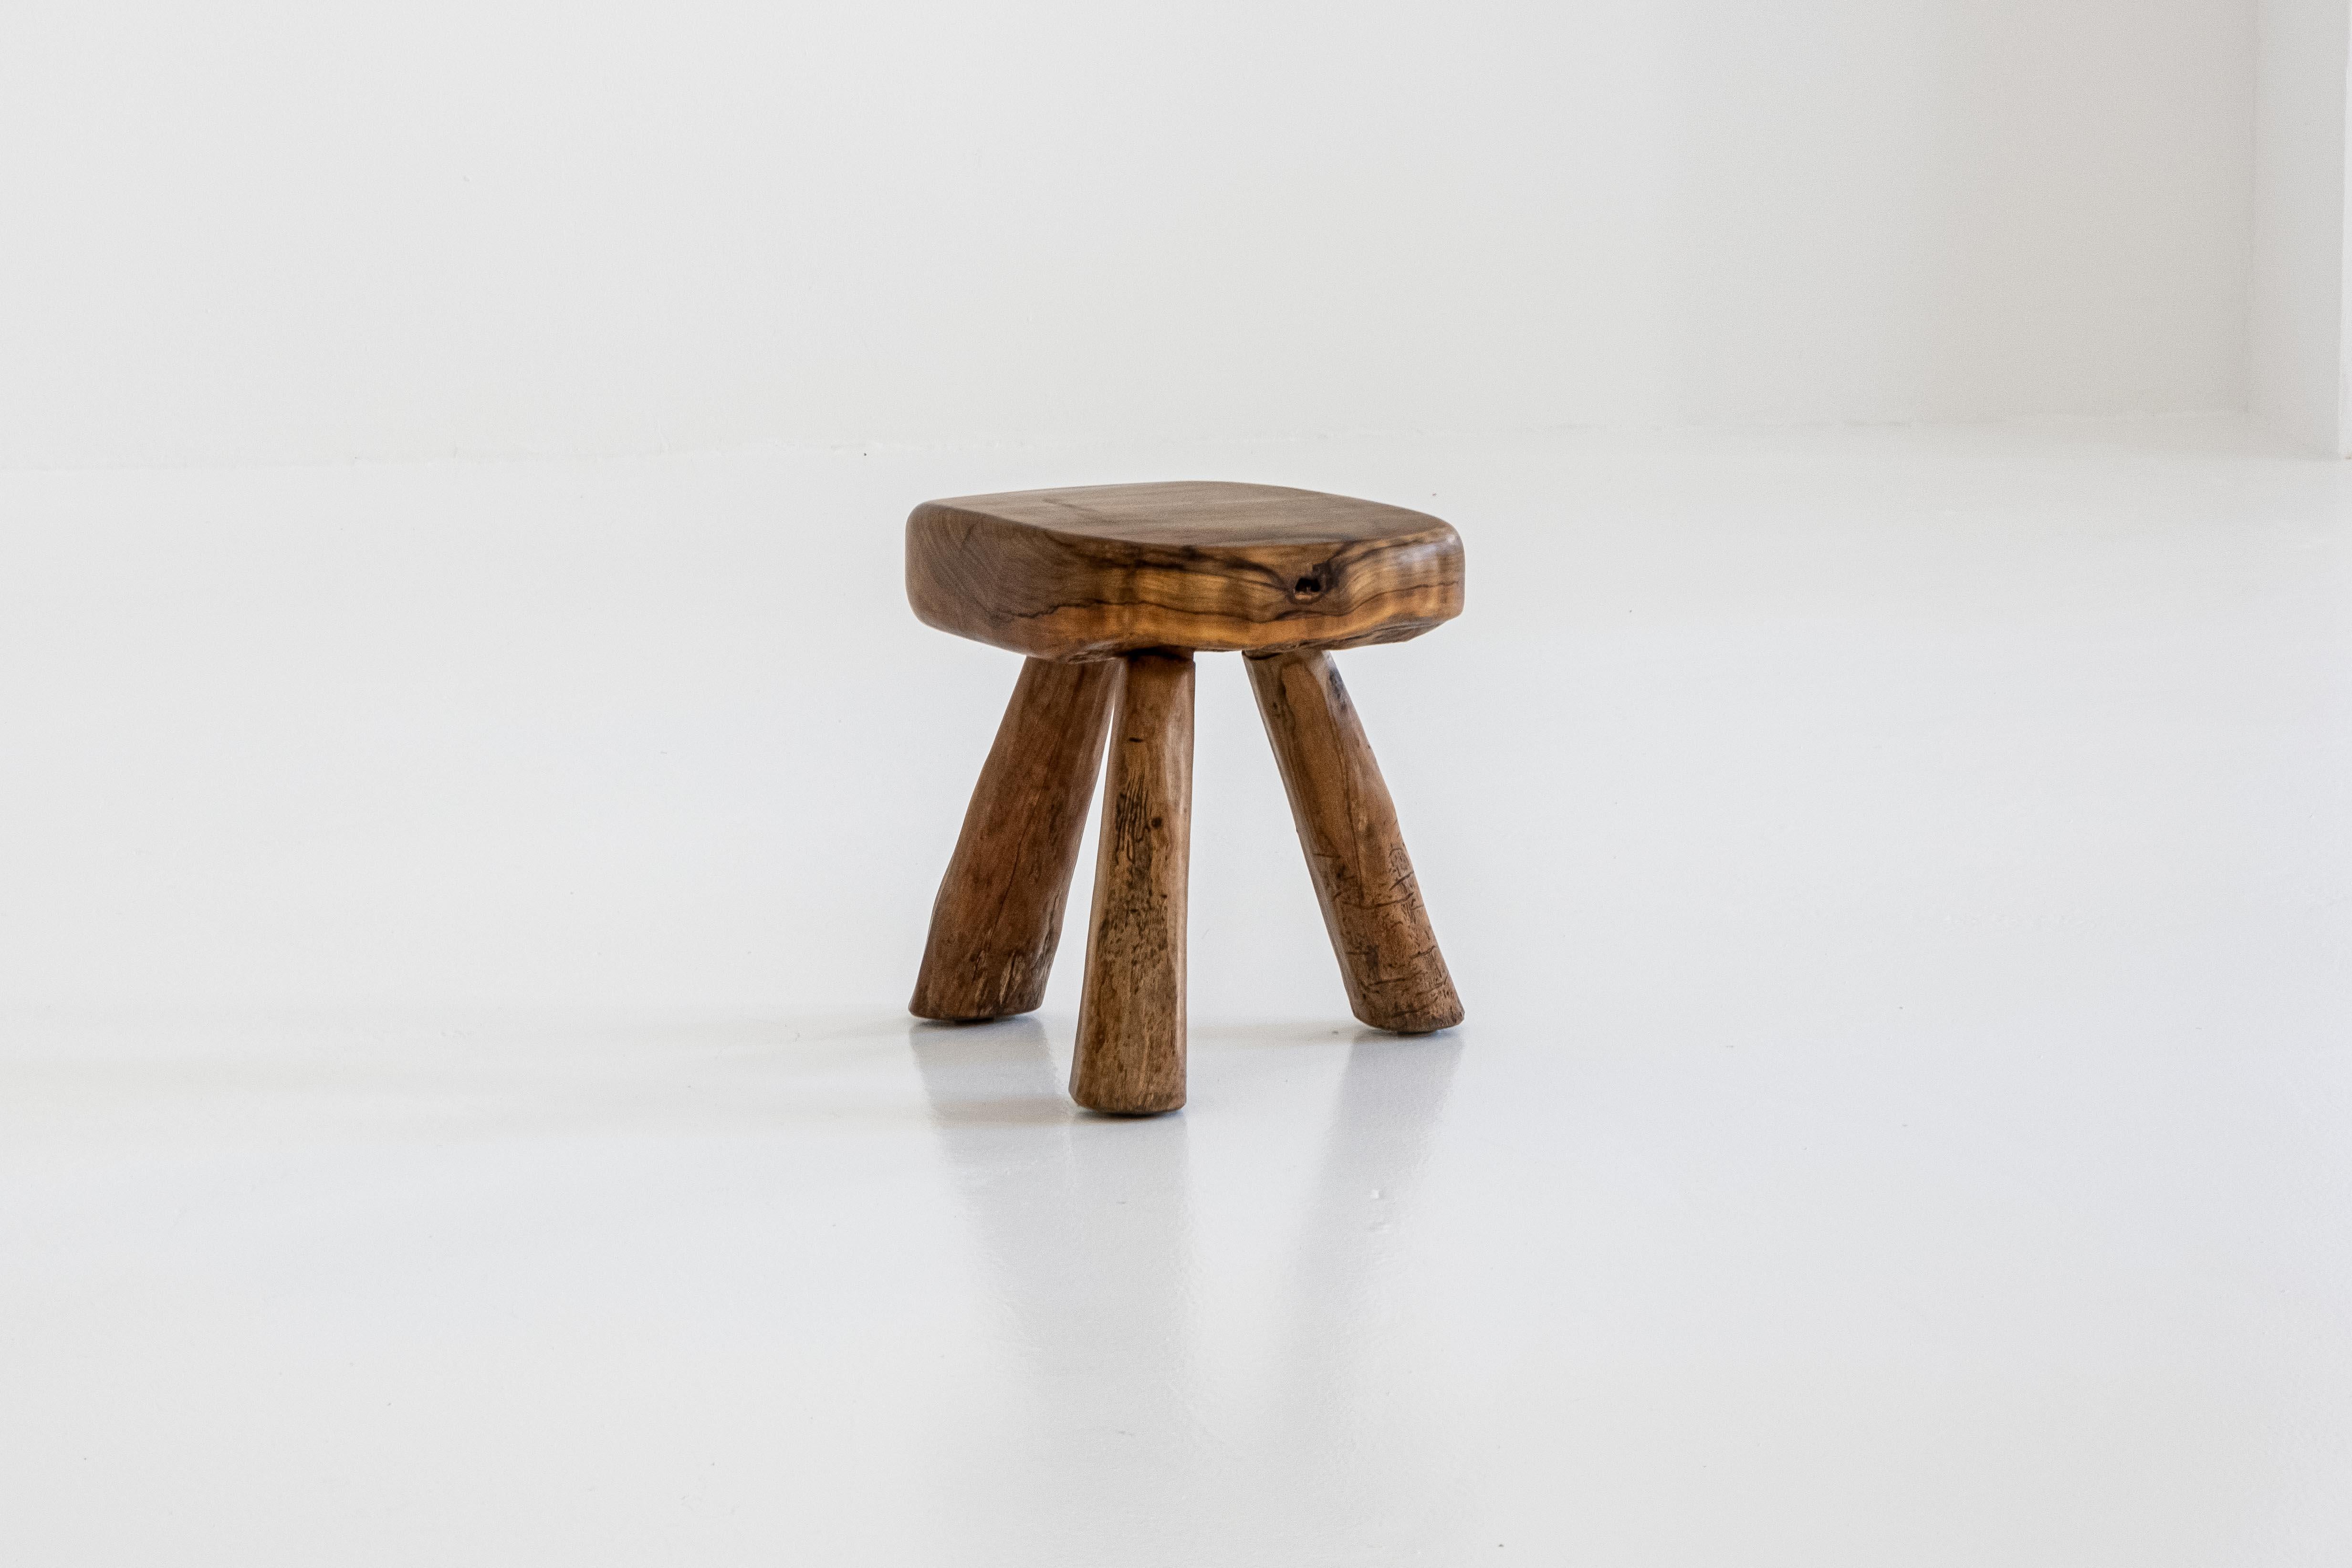 Brutalist Handmade, Rustic, Sculptural, Massiv Olive Wood Tripod Stool or Side Table